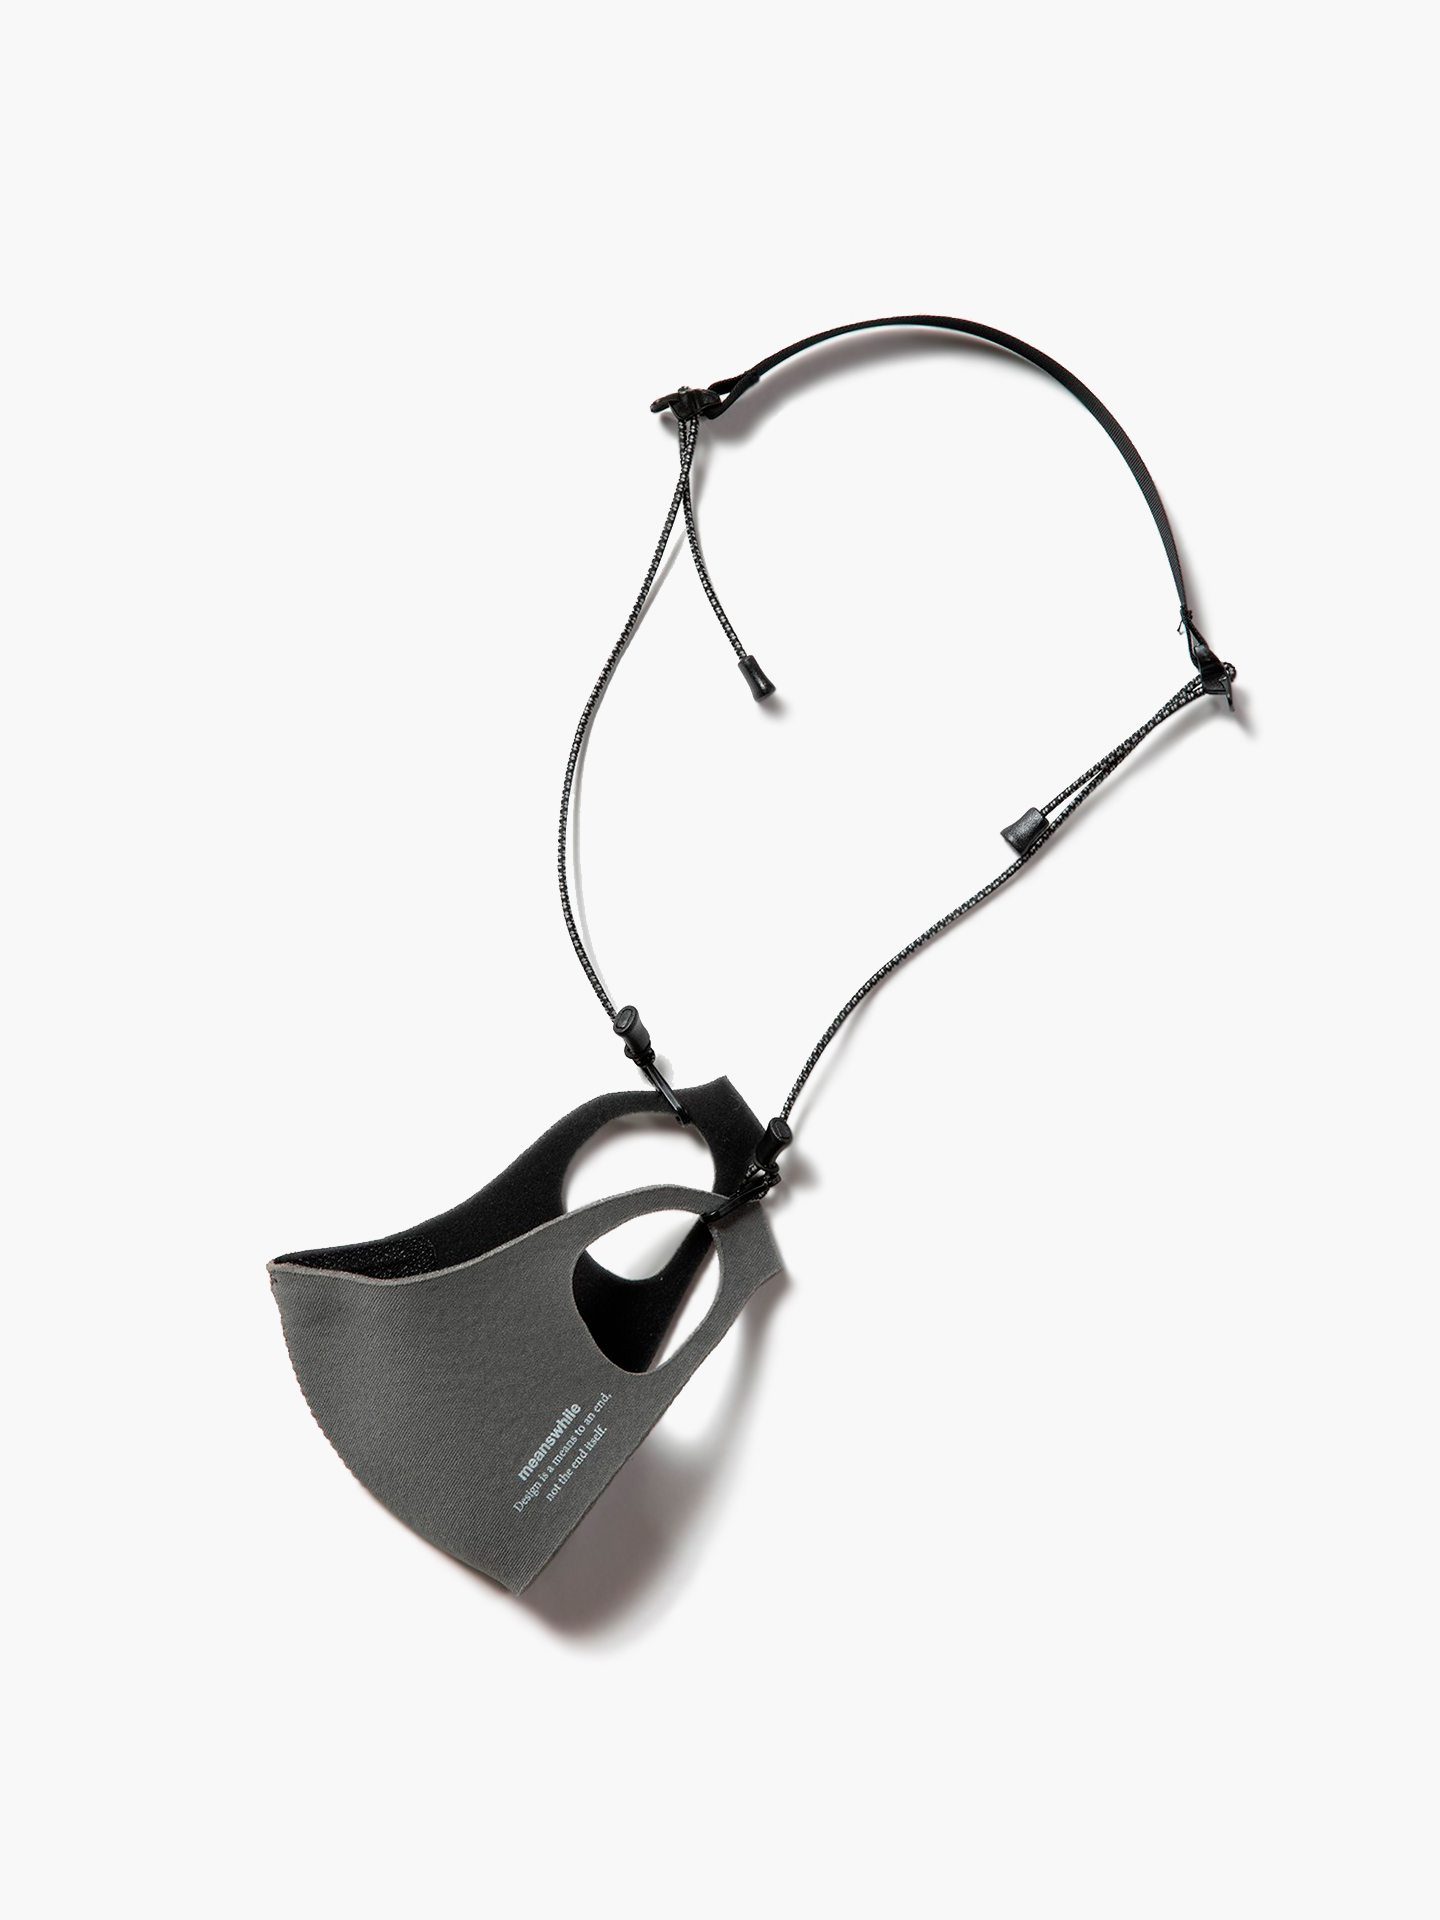 Ремешок для маски Meanswhile Mask Strap grey MW-AC21105/OBL, цвет темно-серый